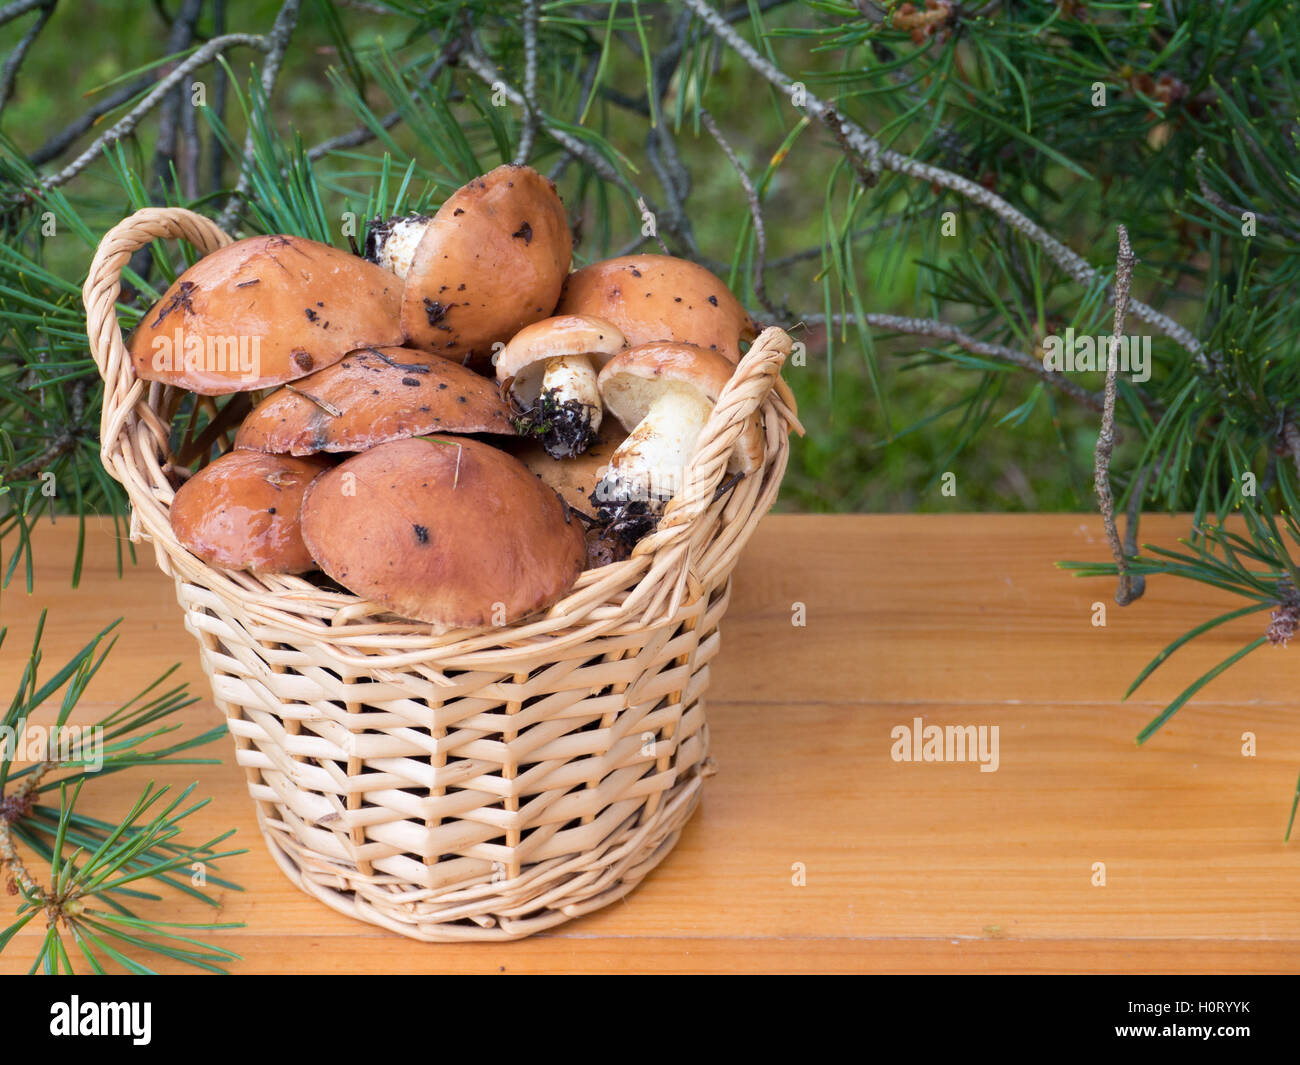 Slippery jacks mushrooms in the basket under pine tree on the planks background Stock Photo